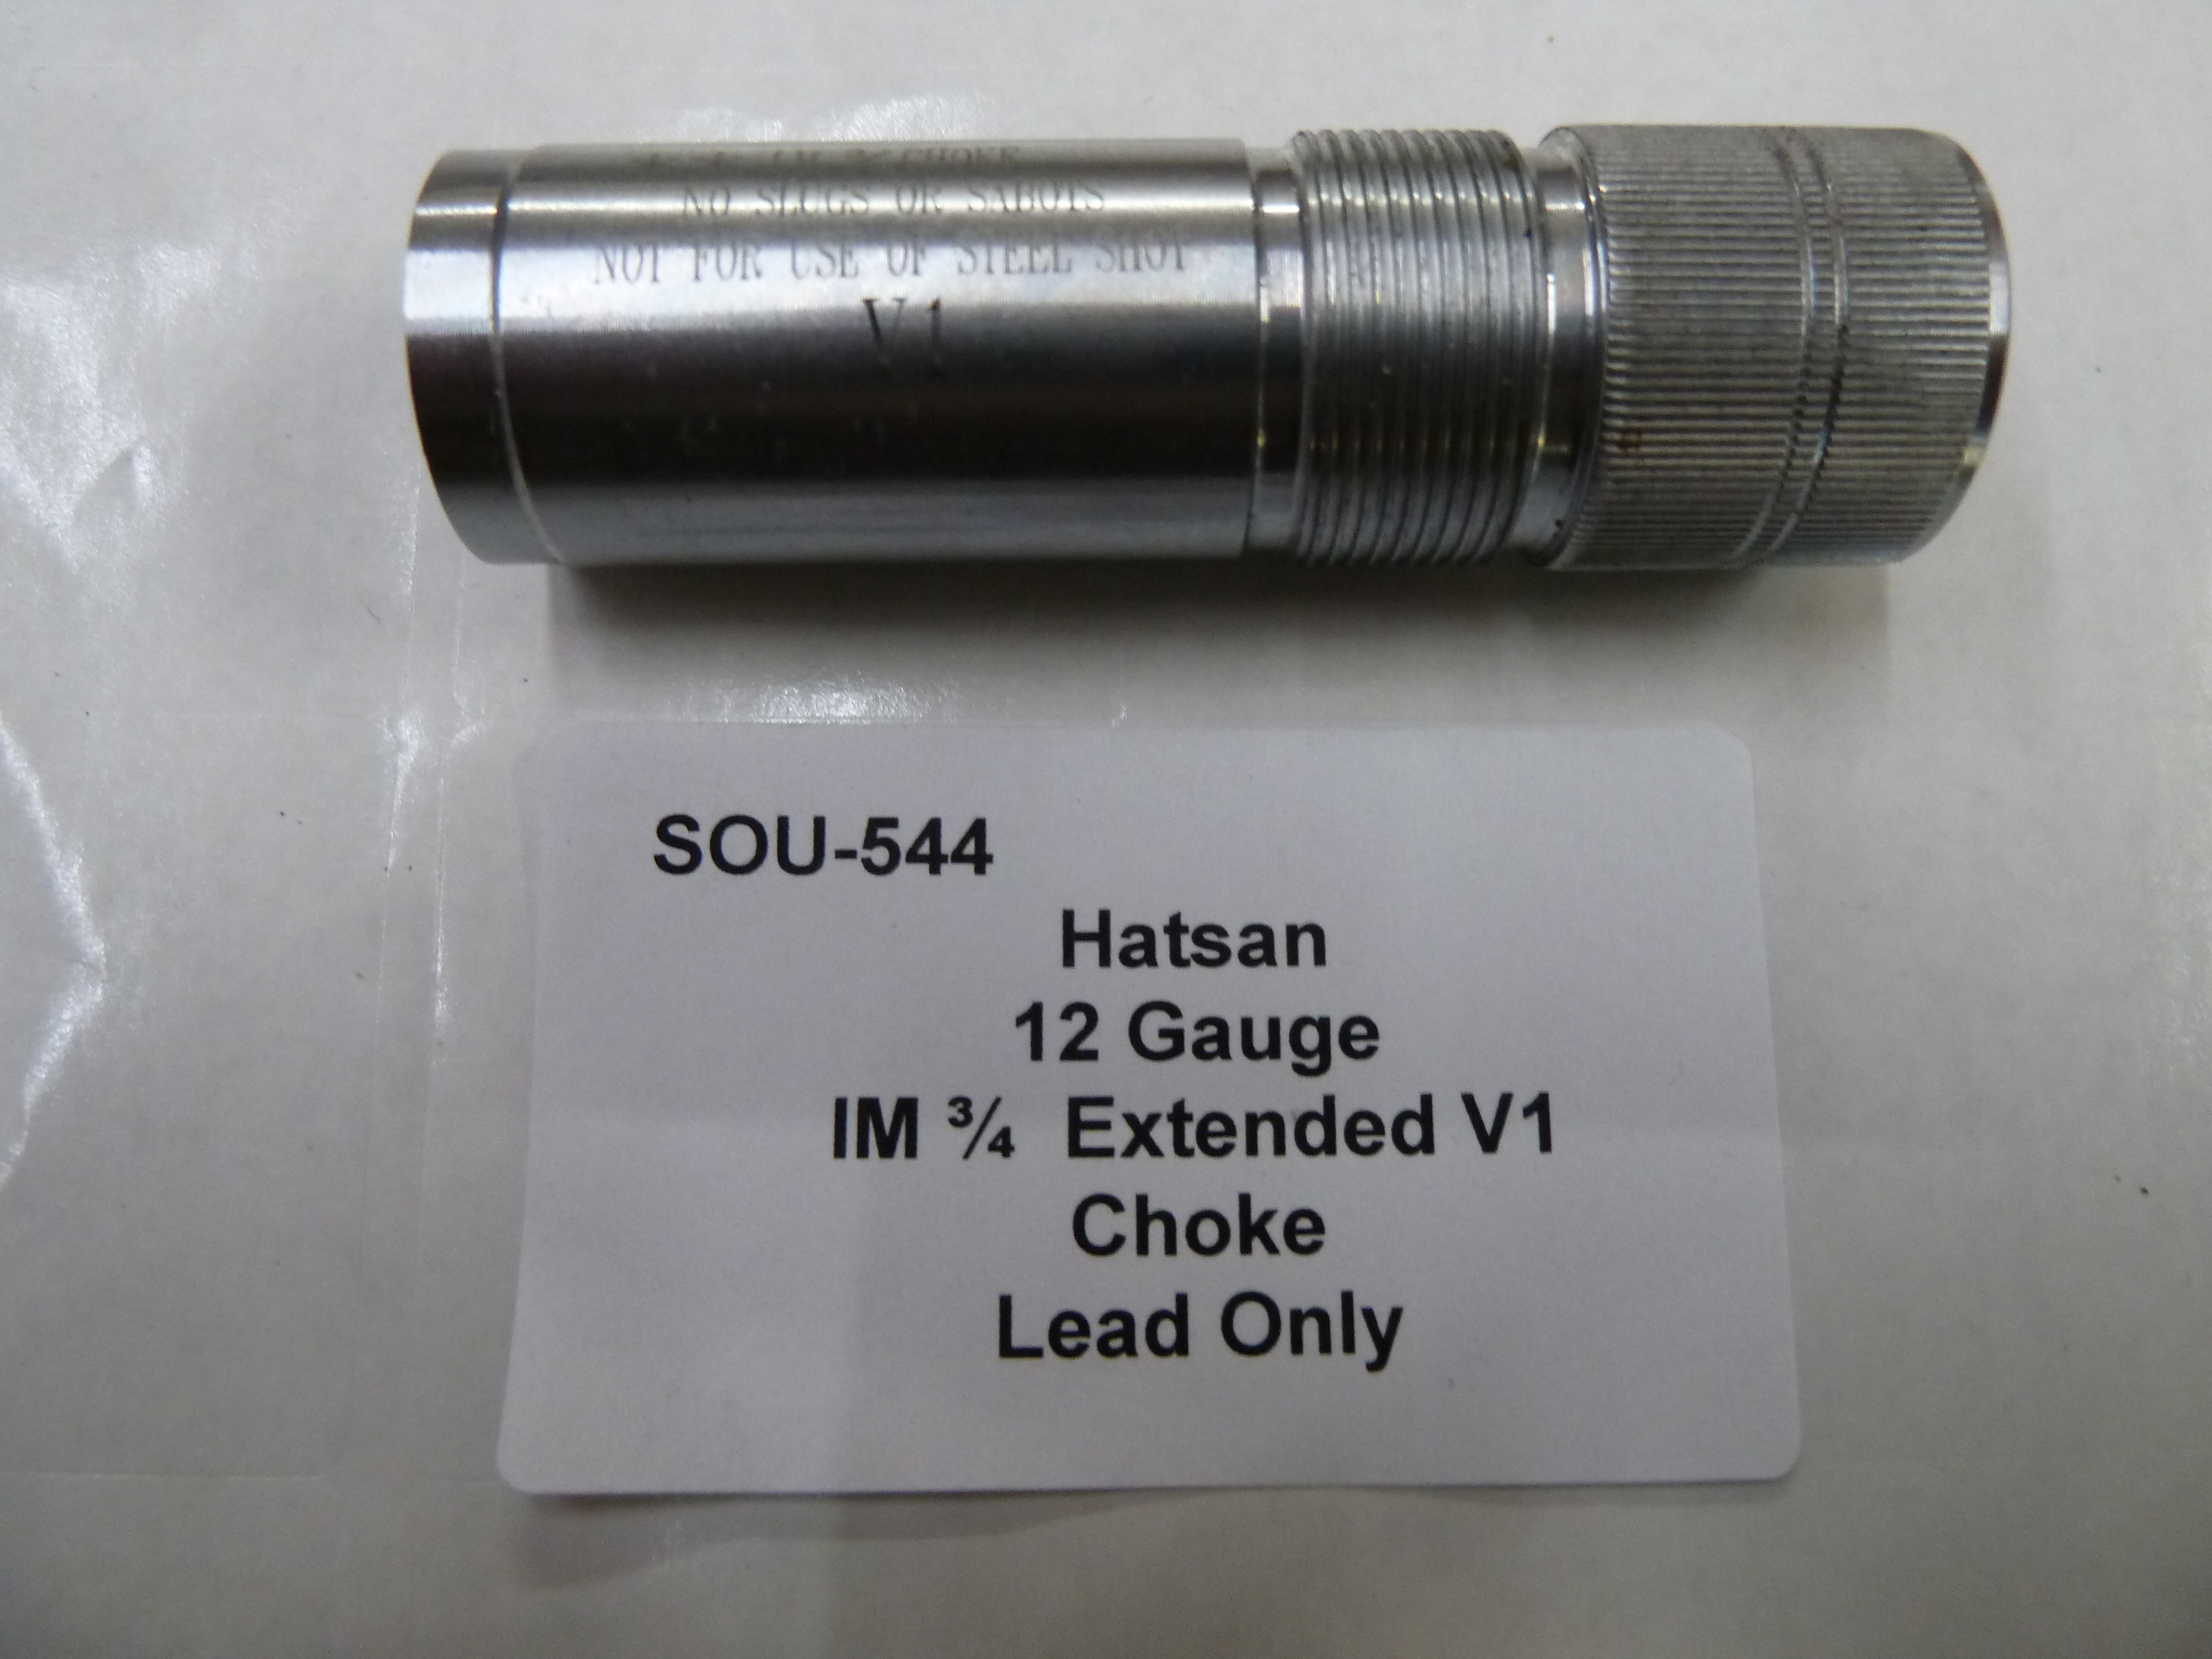 SOU-544 12 gauge IM extended V1 choke lead only